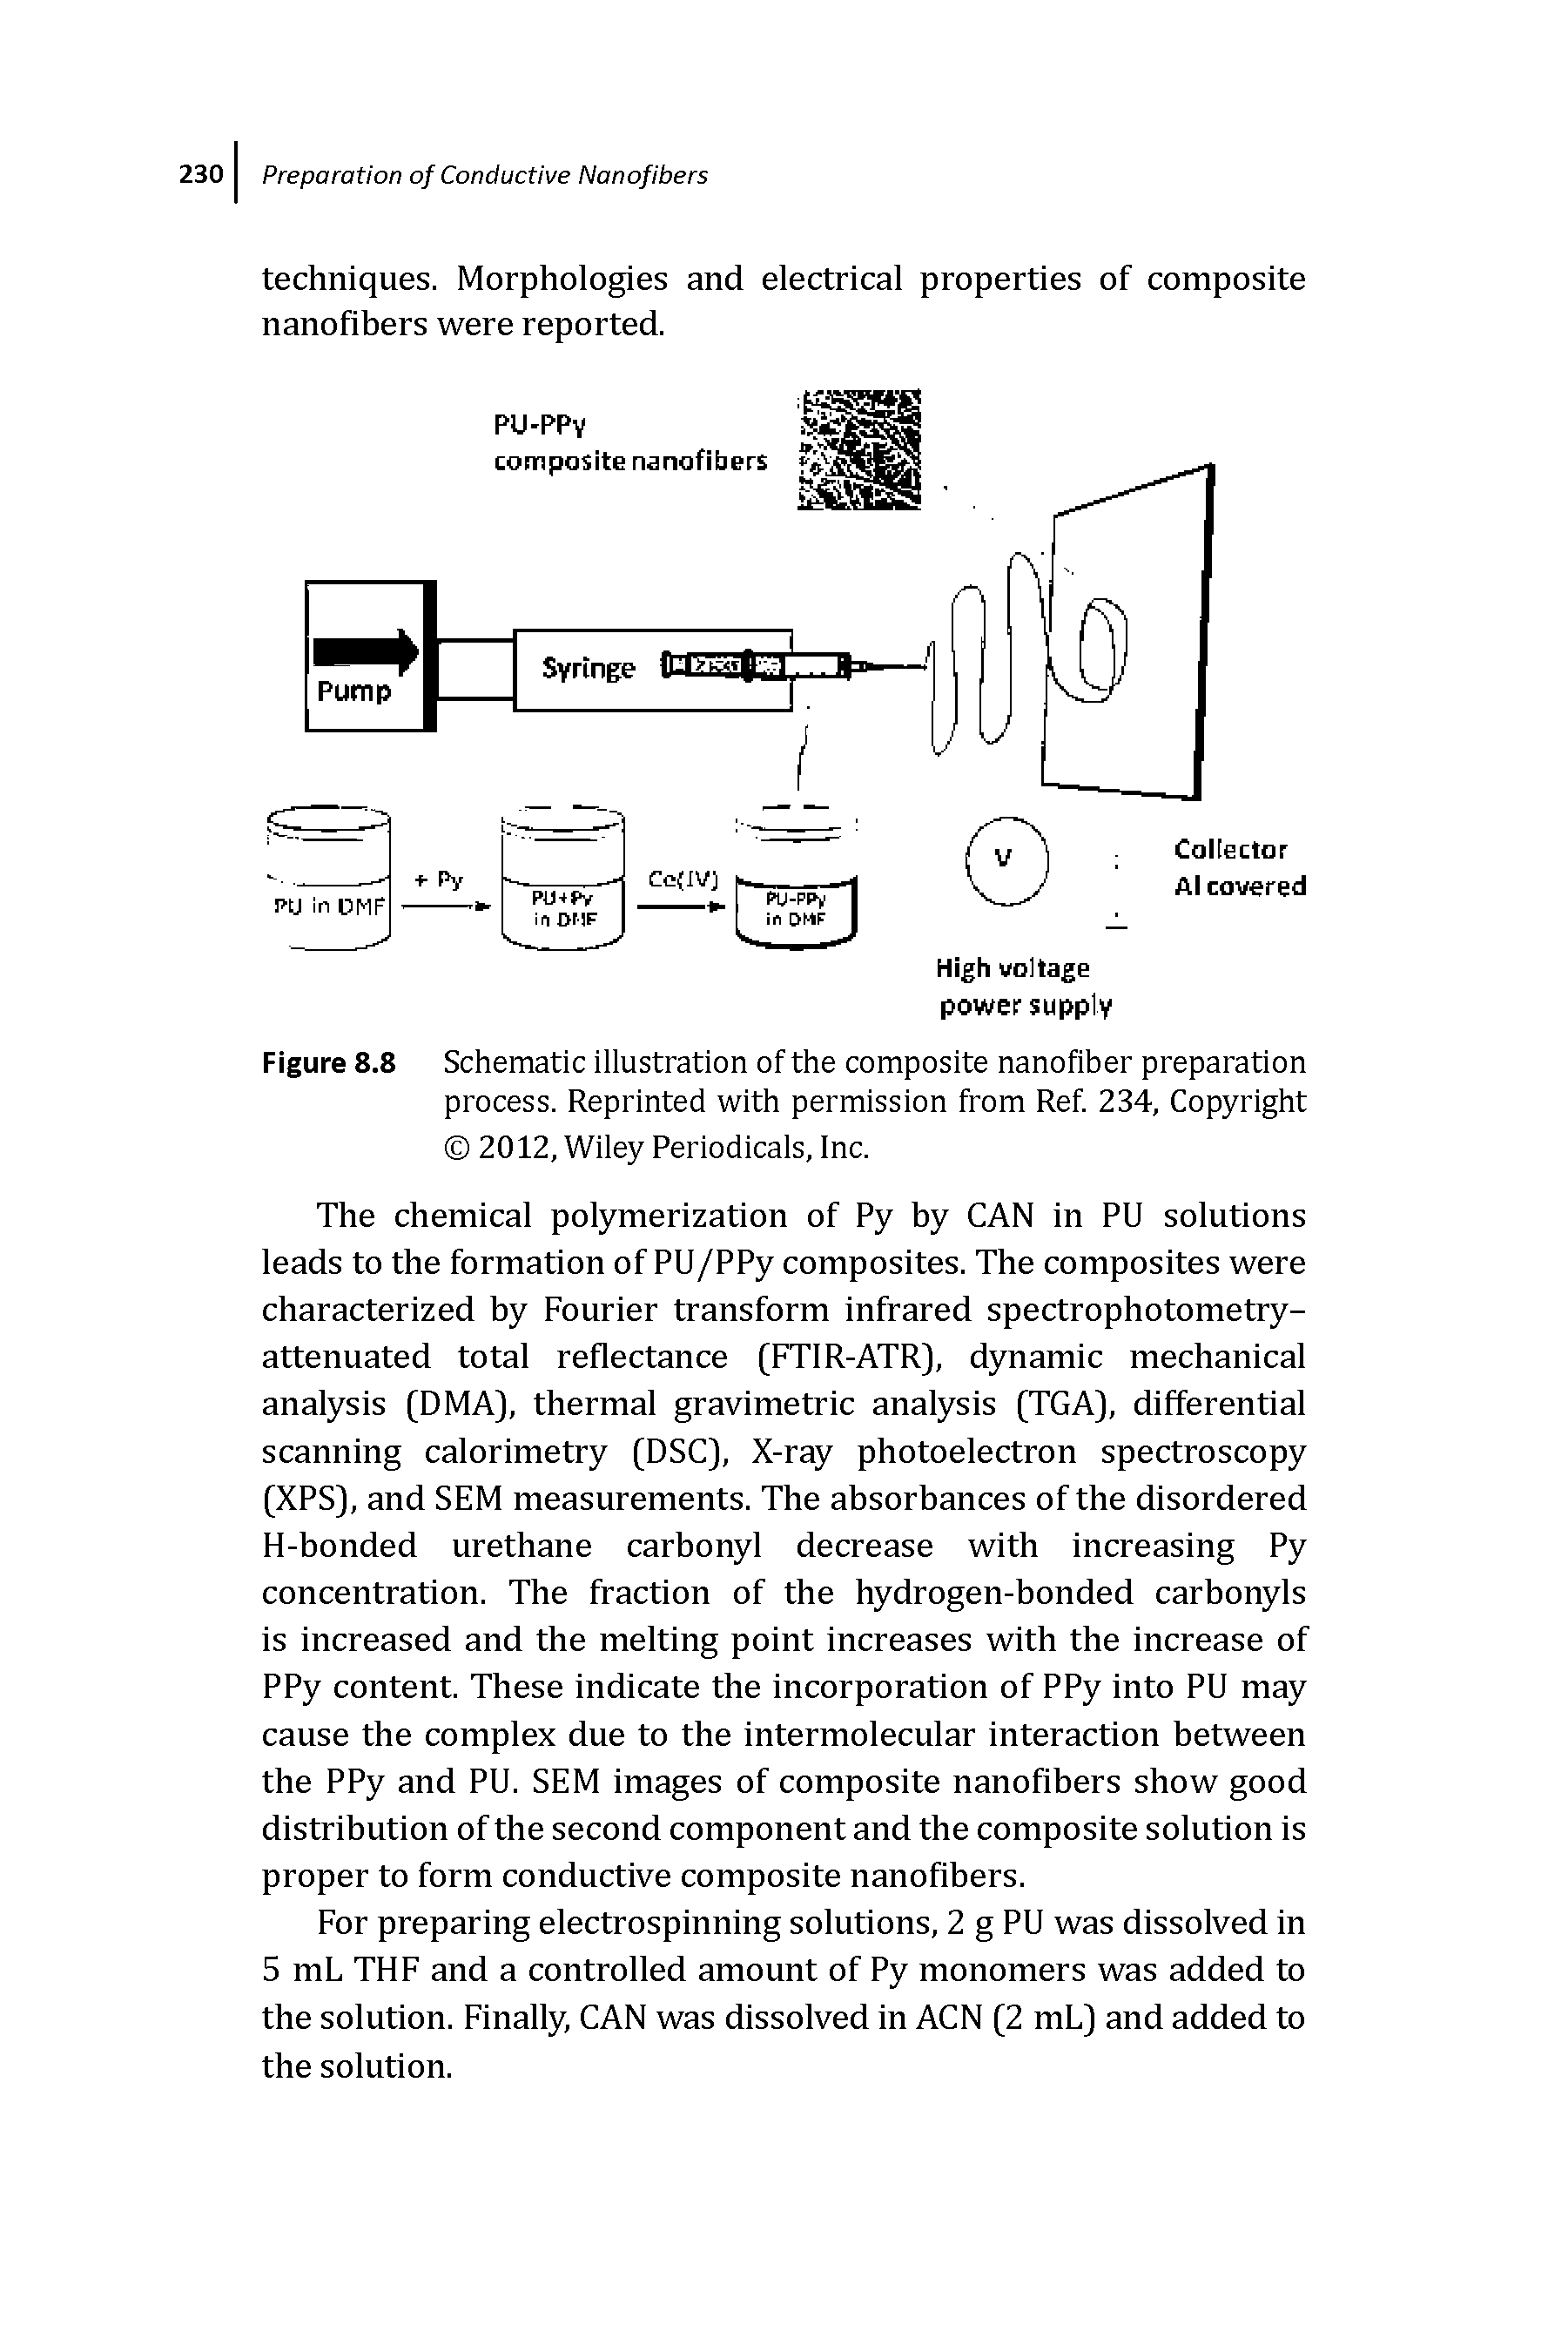 Figure 8.8 Schematic illustration of the composite nanofiber preparation...